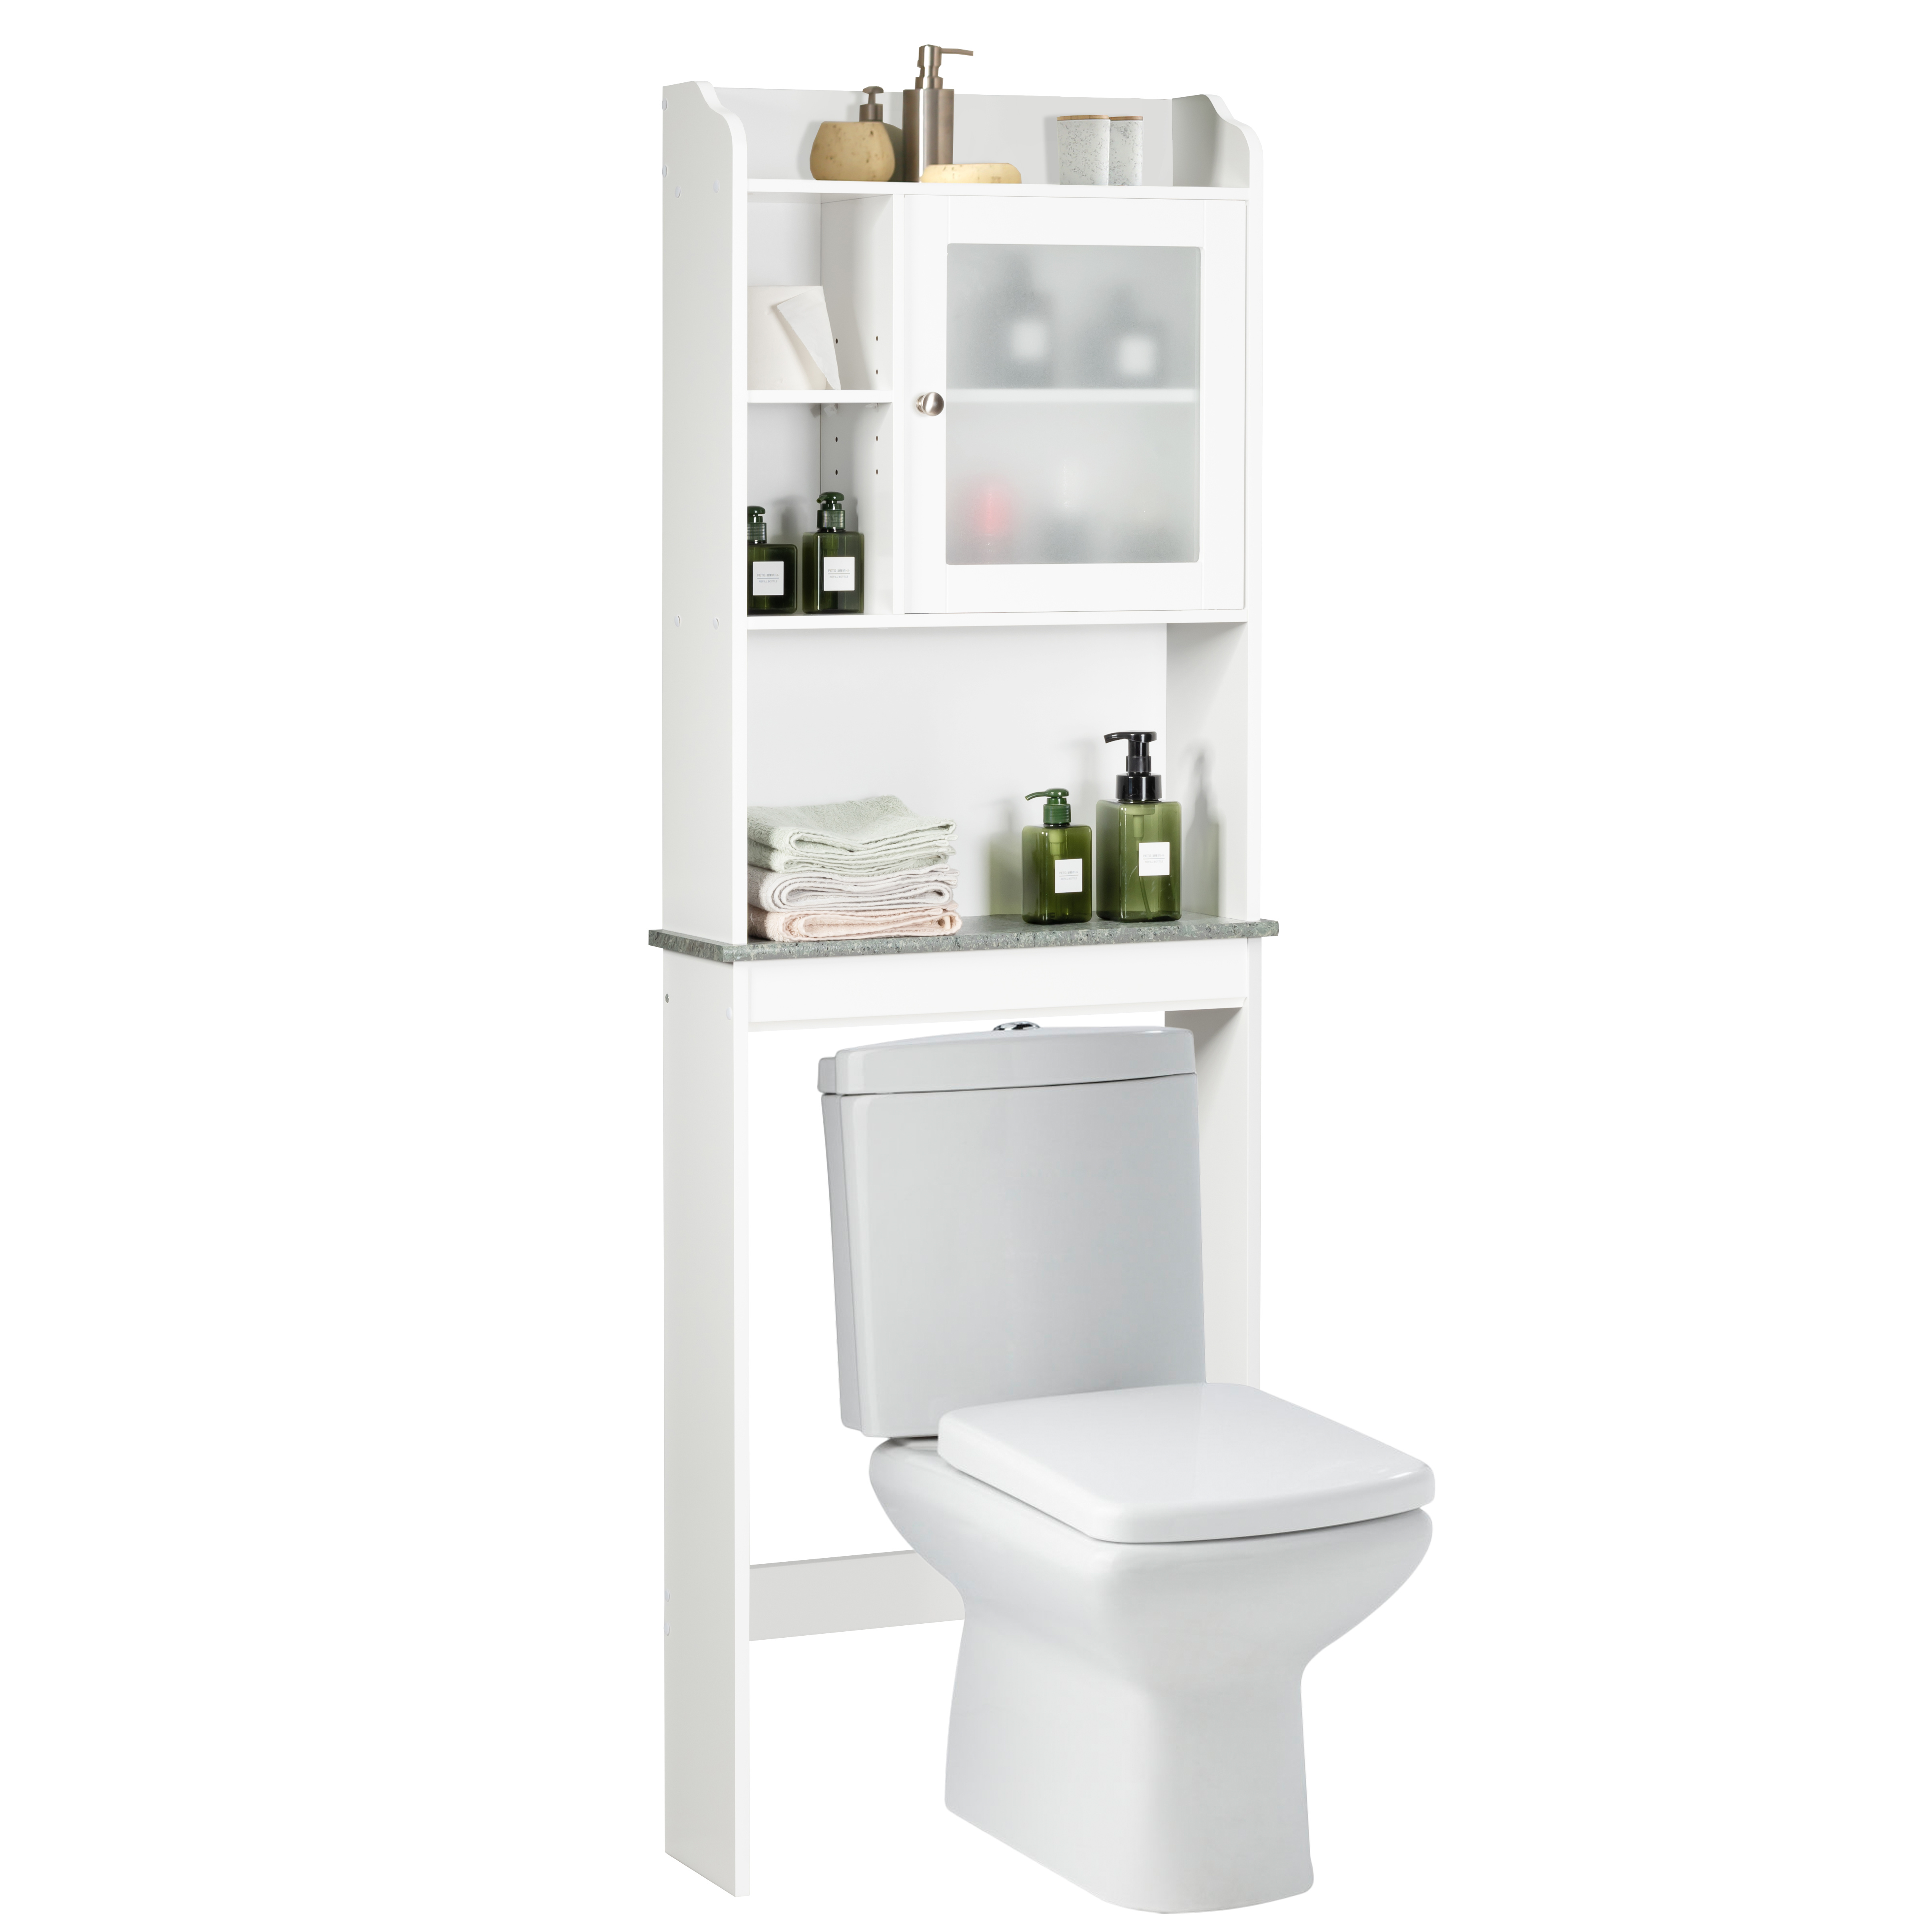 

Goplus Over-the-toilet Bath Cabinet Bathroom Space Saver Storage Organizer White